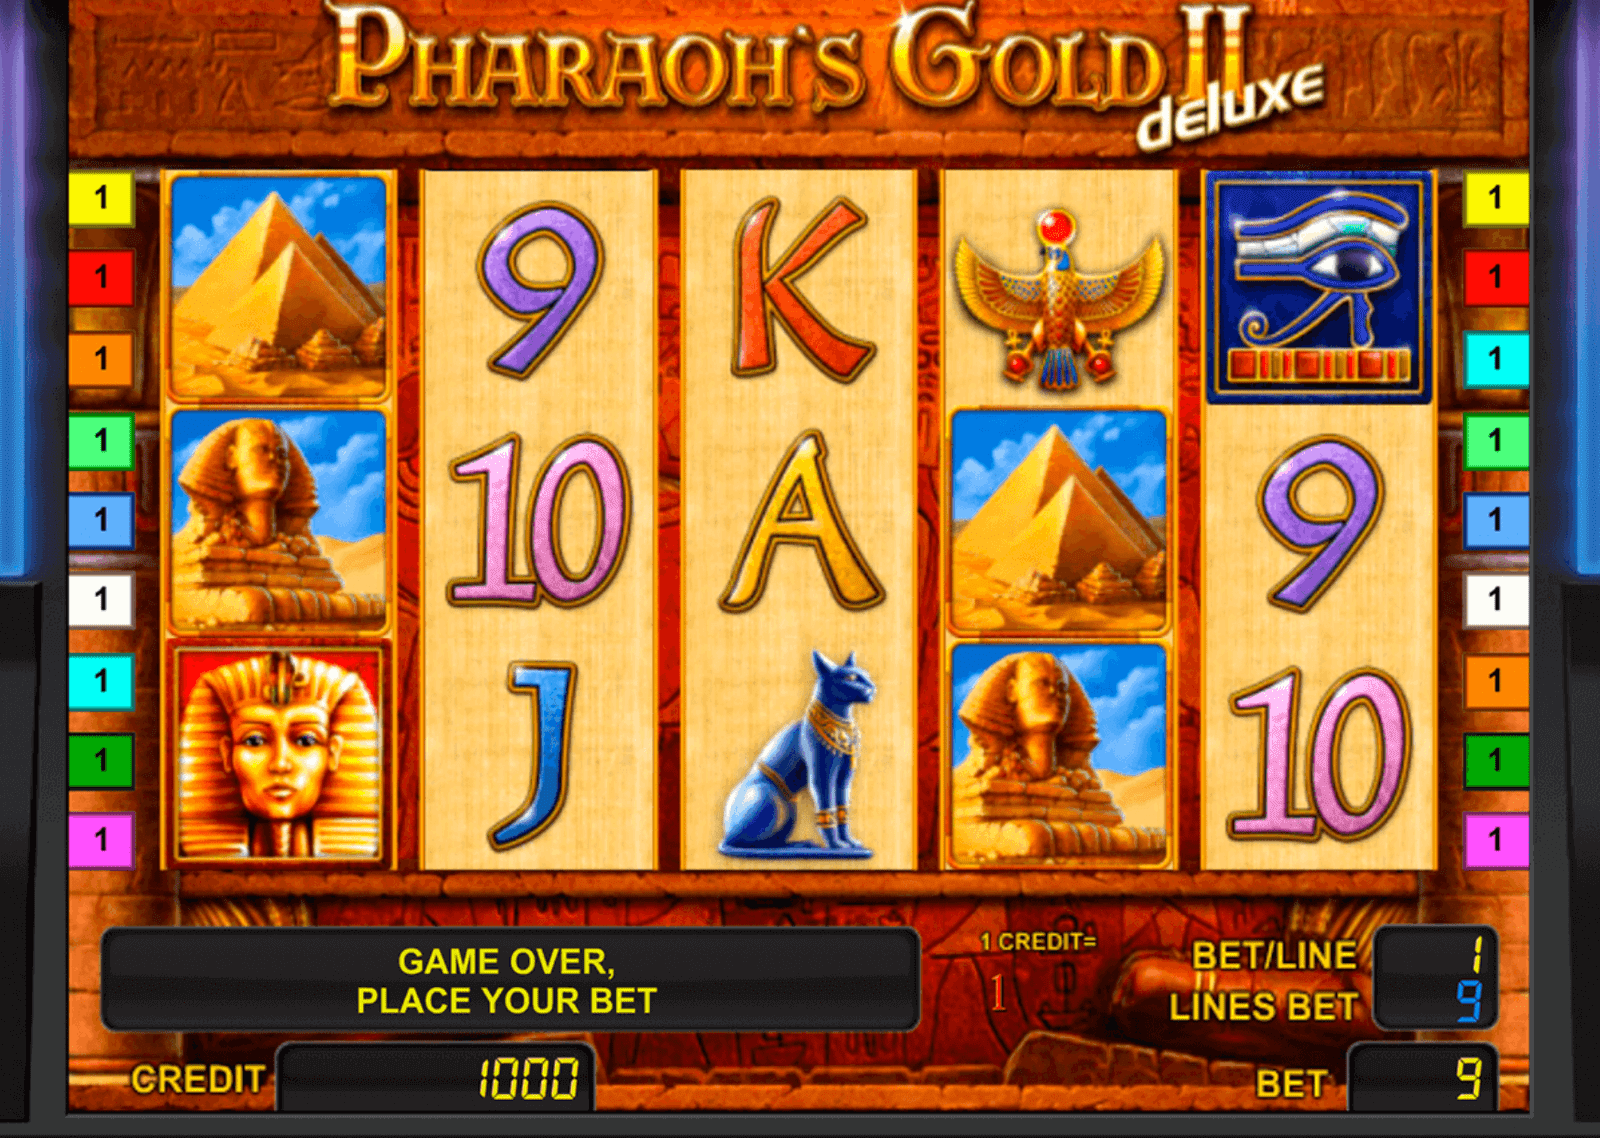 Jugar gratis a la tragamonedas Pharaoh's Gold II Deluxe de Novomatic